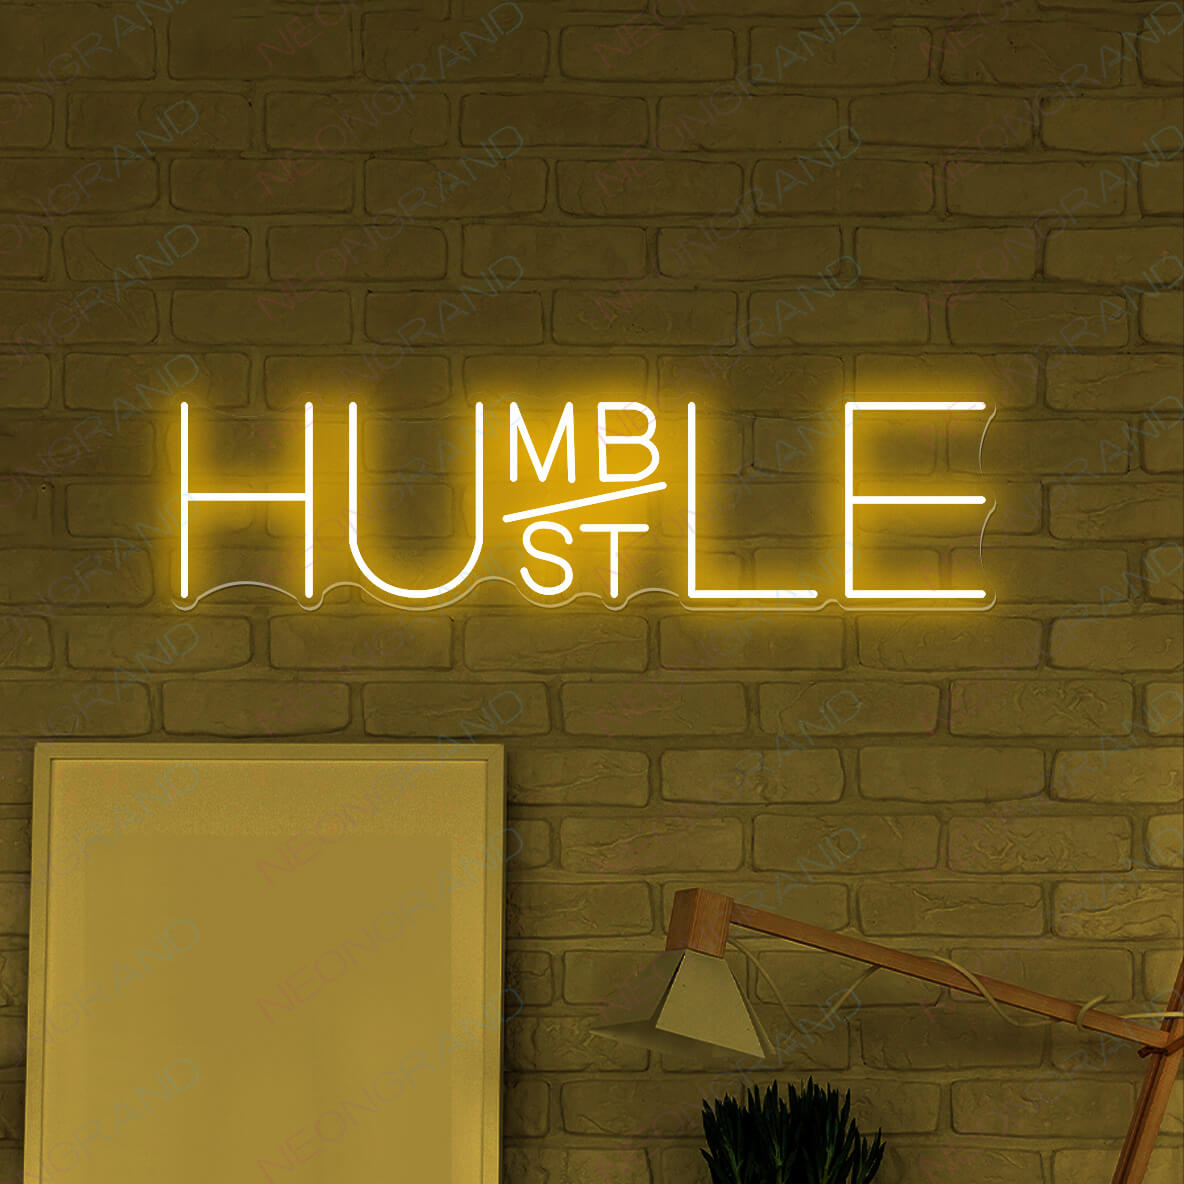 Hustle Neon Sign Humble Hustle Led Light orange yellow